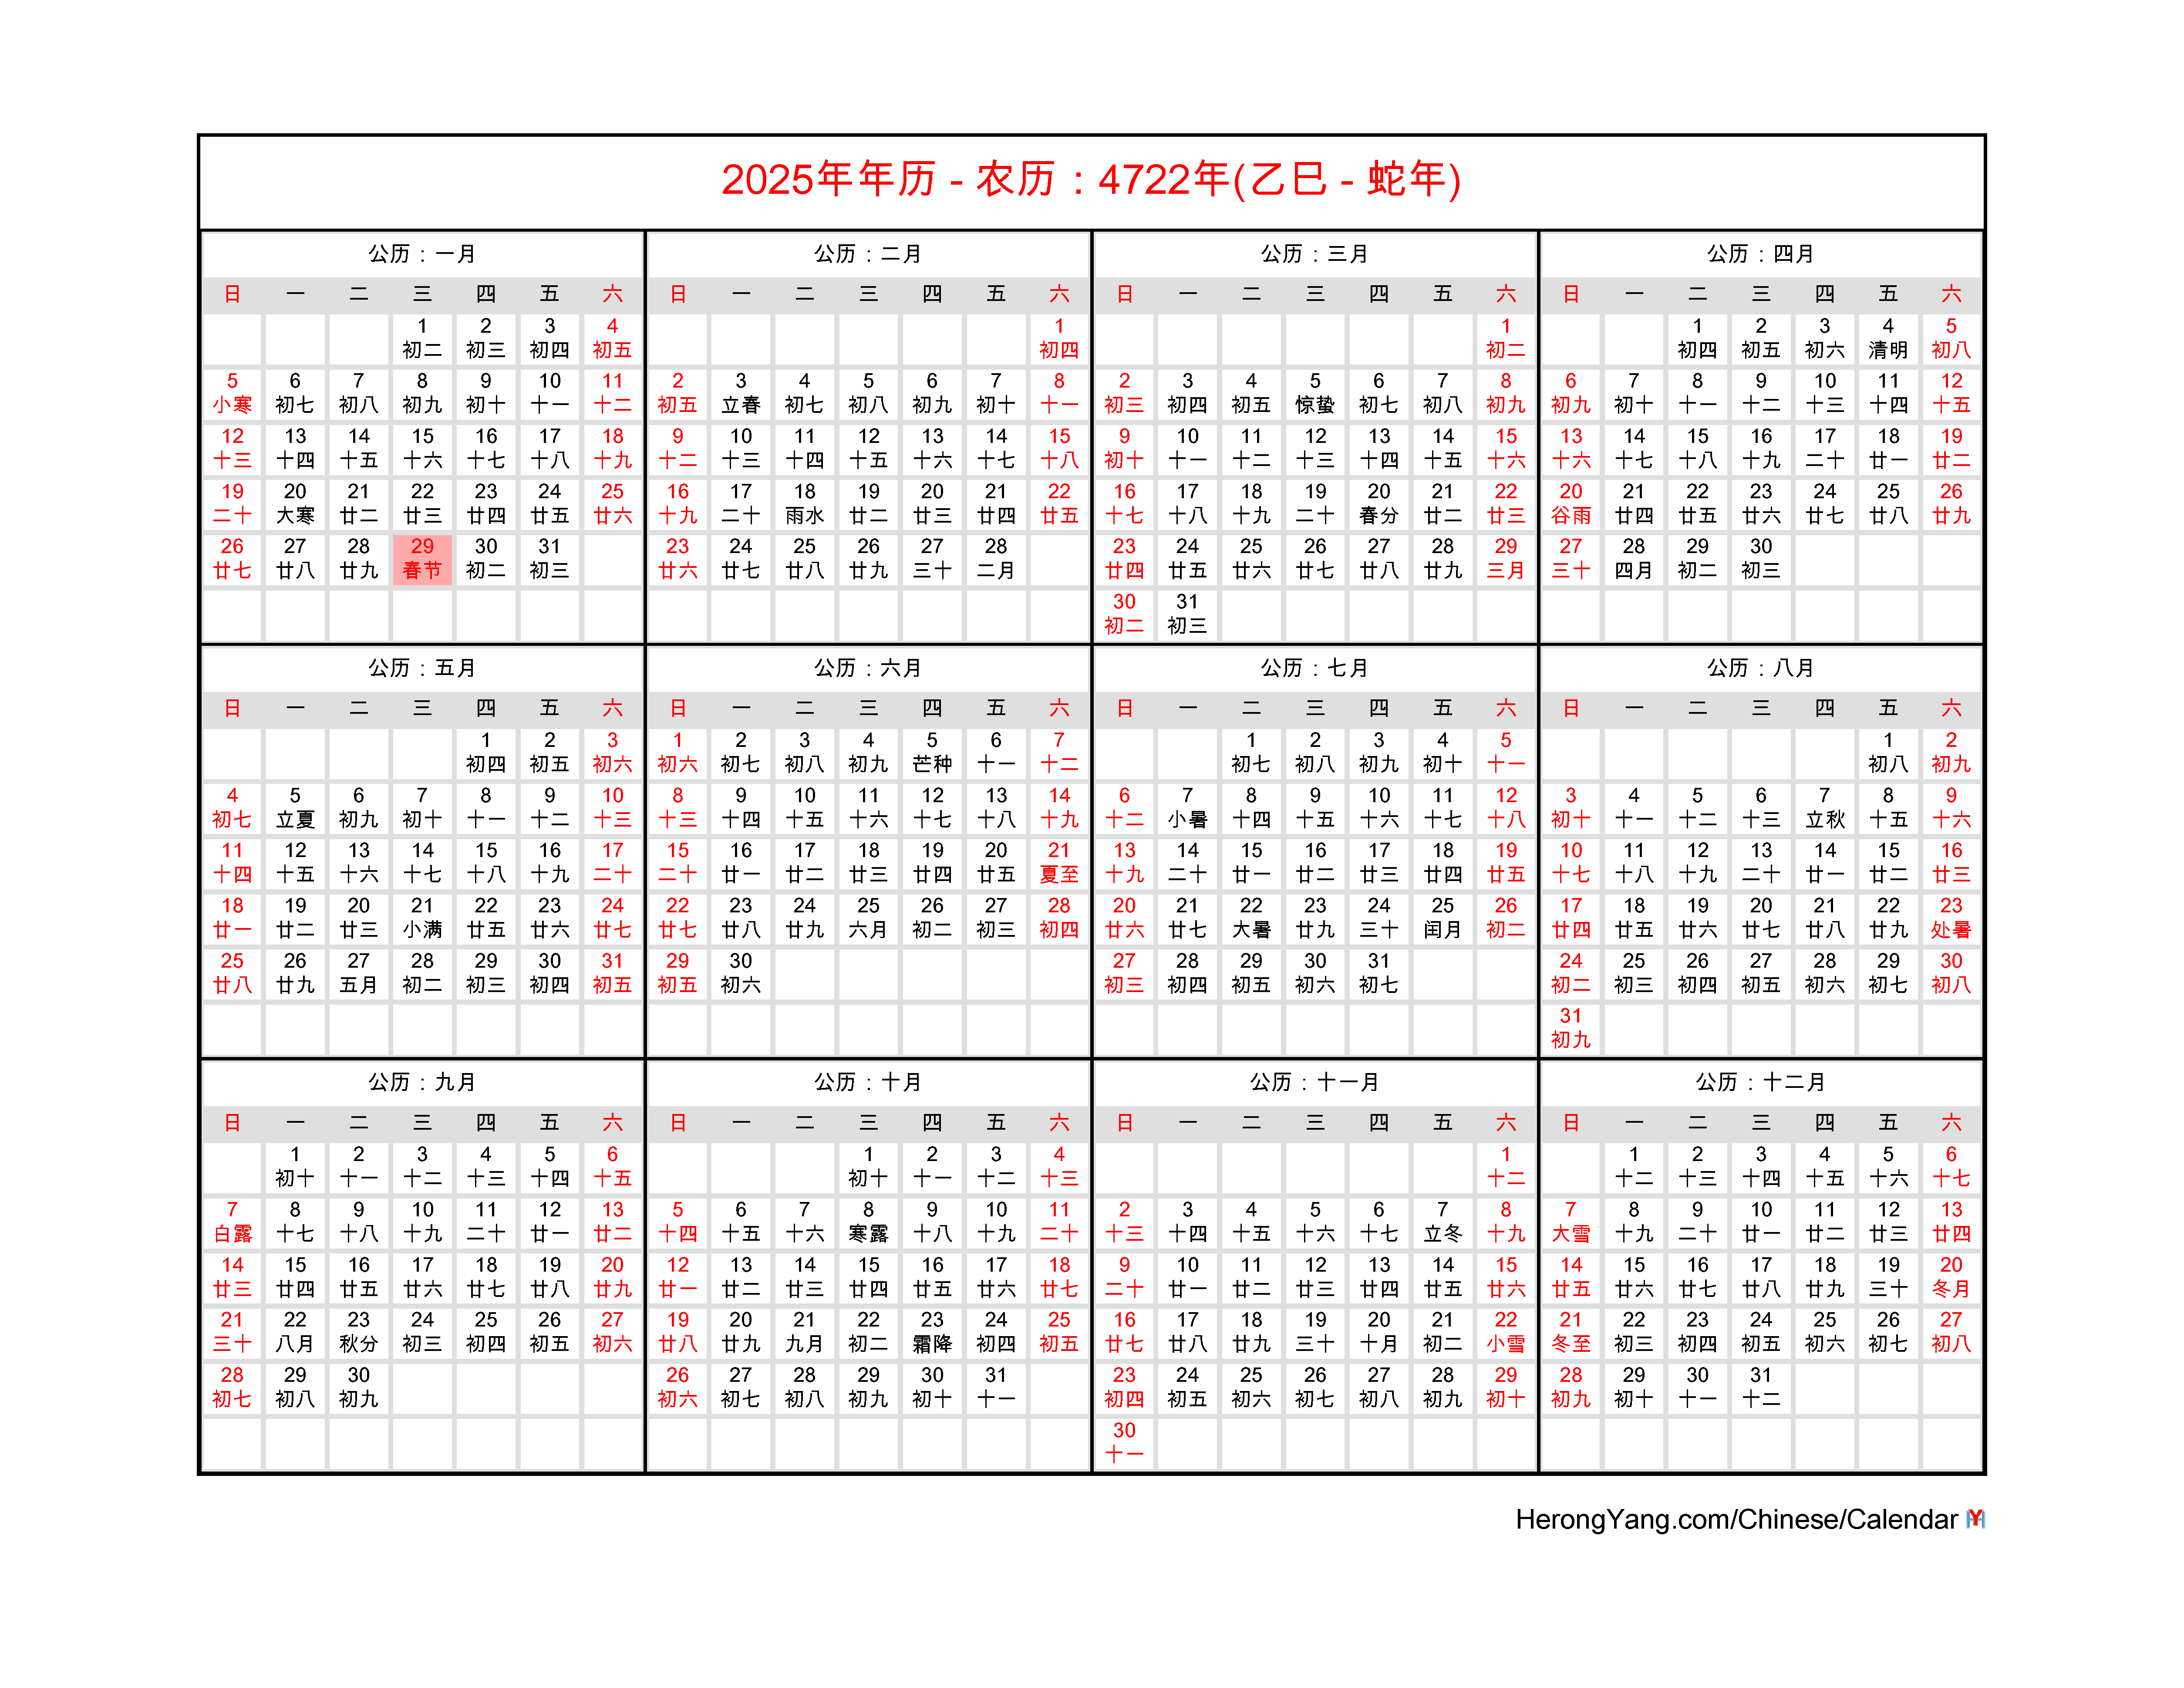 2025 Calendar Chinese